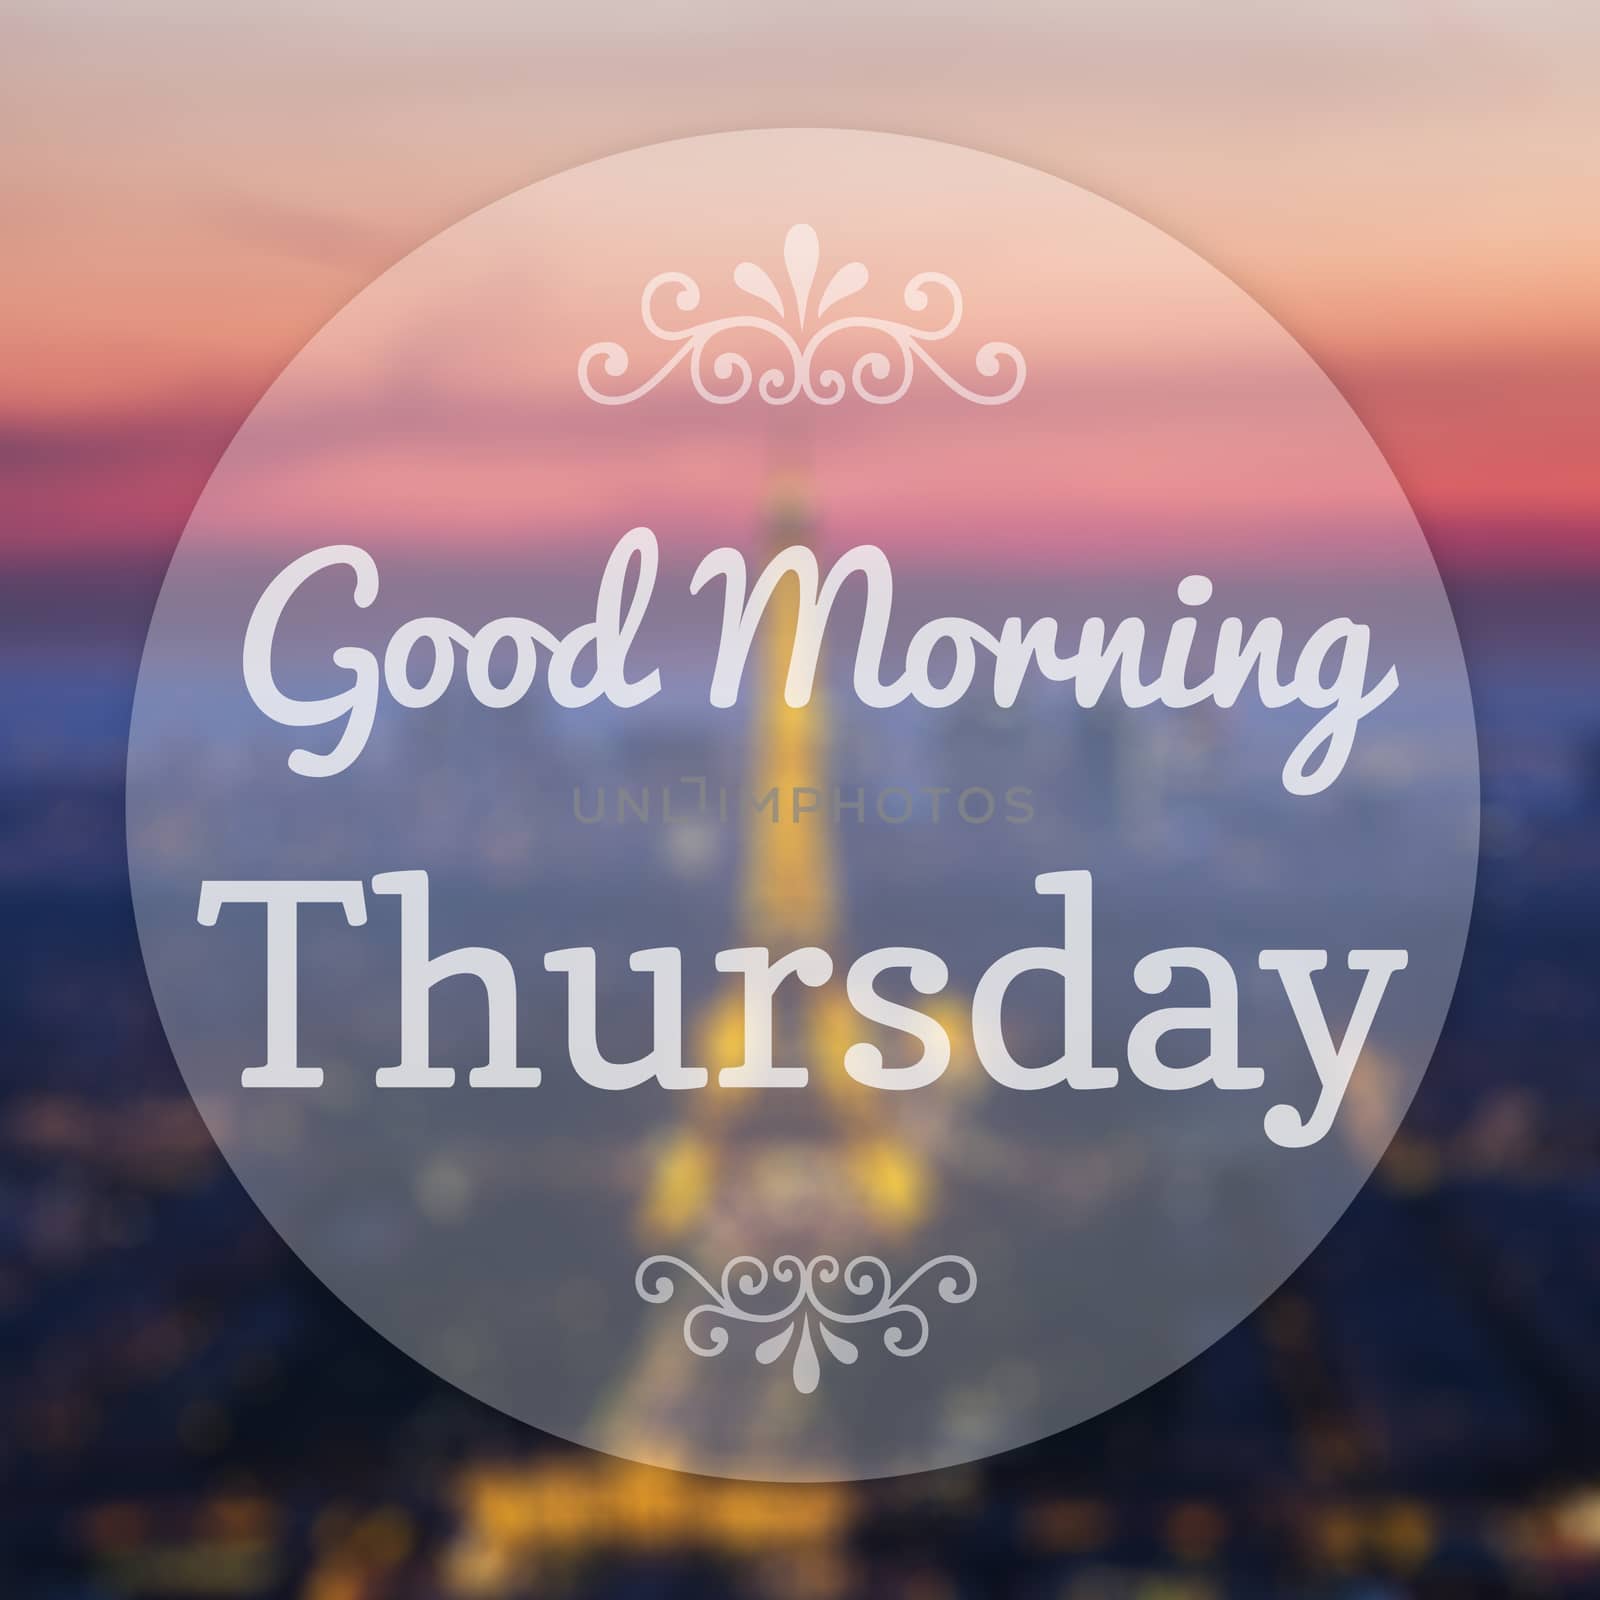 Good Morning Thursday on Eiffle Paris blur background by 2nix